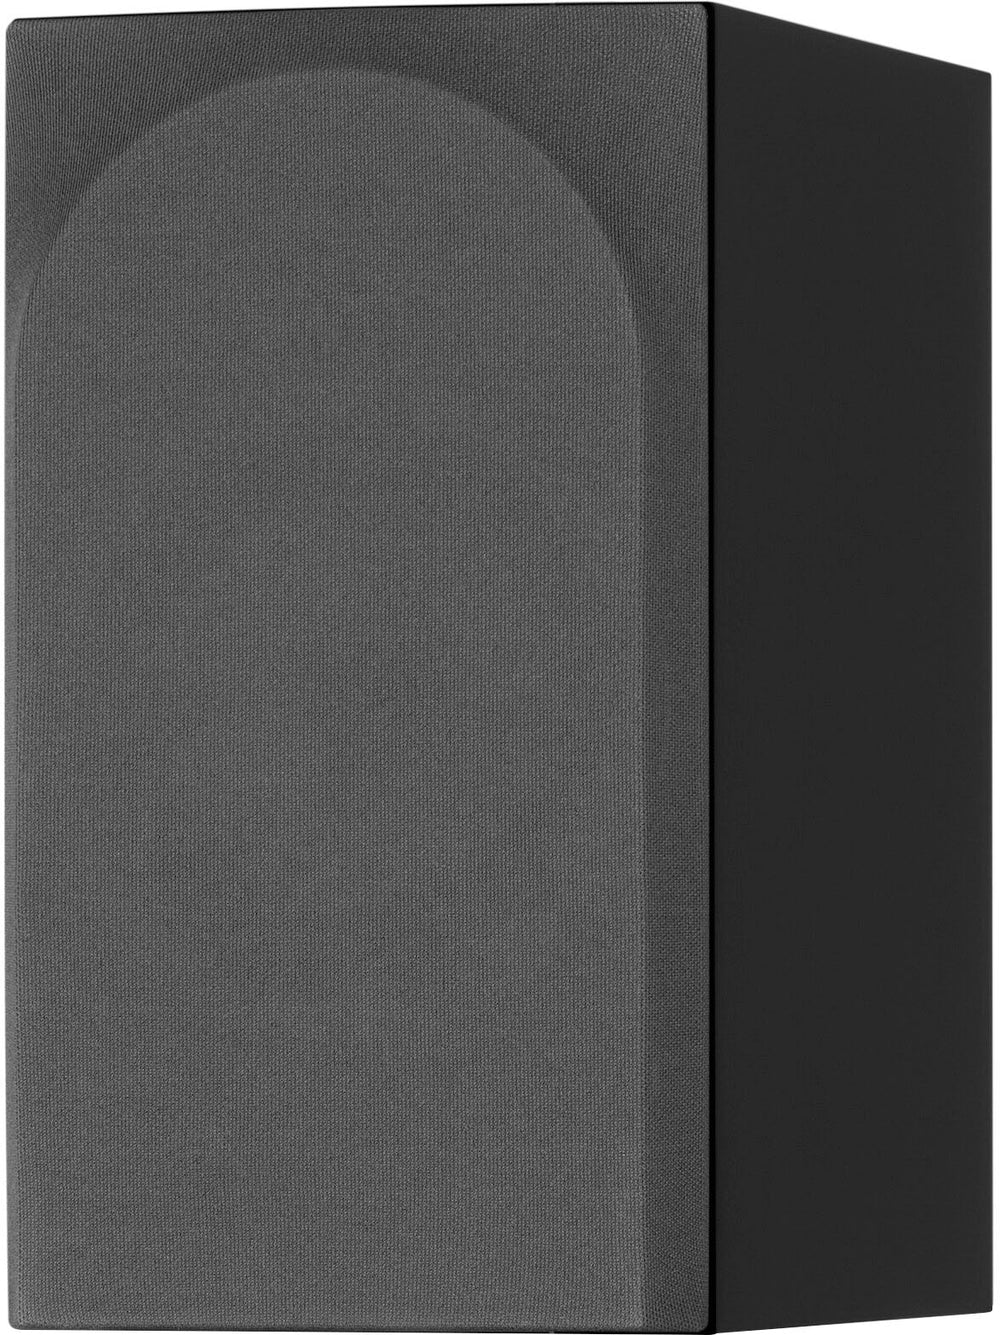 Bowers & Wilkins - 700 Series 3 Bookshelf Speaker w/6.5" midbass (pair) - Gloss Black_1